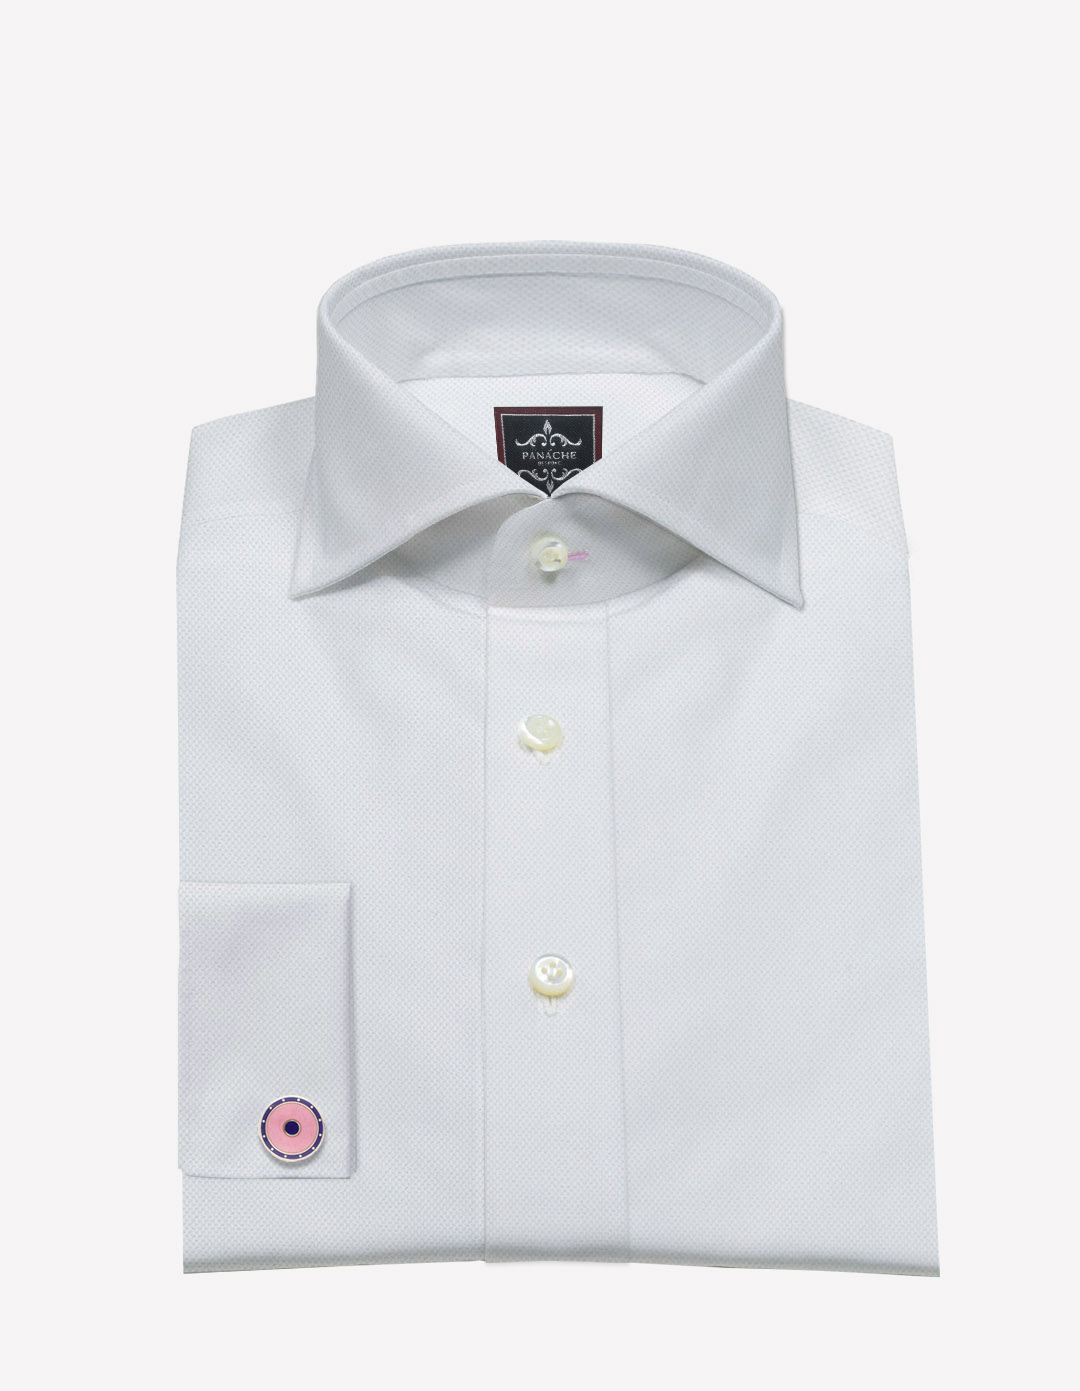 Monotonous Be excited Employee Best White Dress Shirt | White Shirts Dress | White Formal Men's Shirt |  Luxury 1